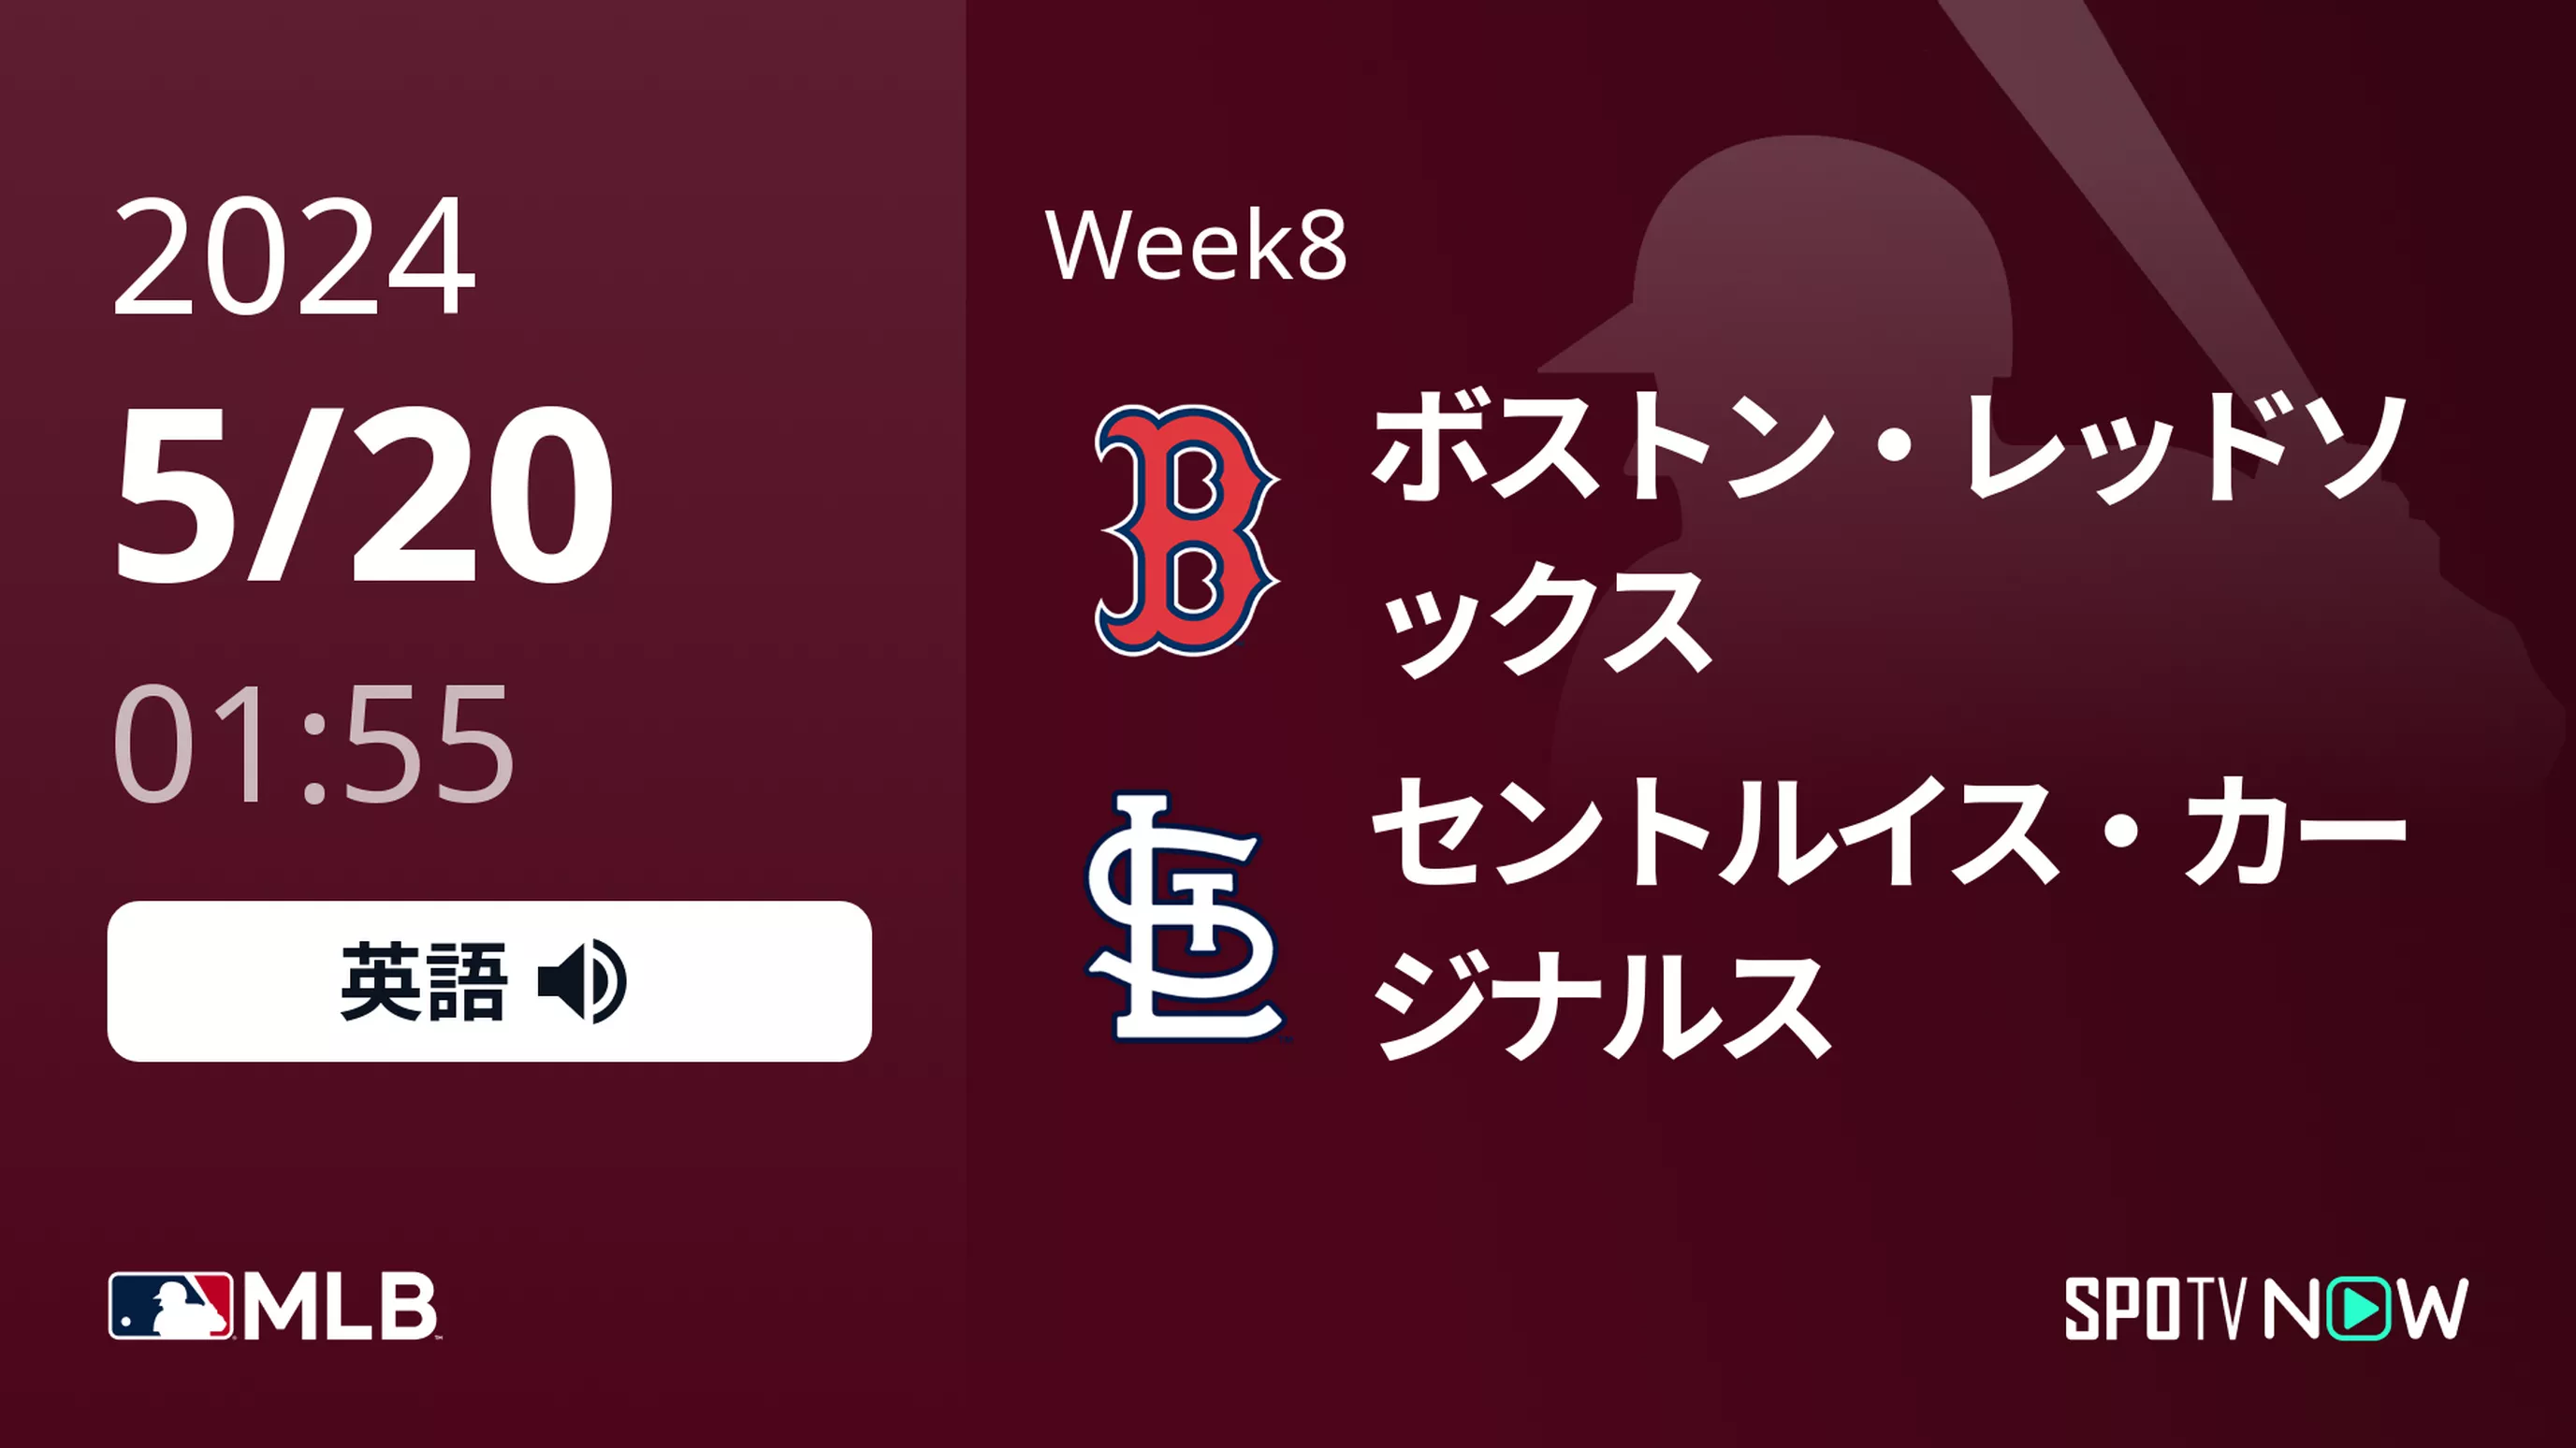 Week8 Rソックス vs カージナルス 5/20[MLB]